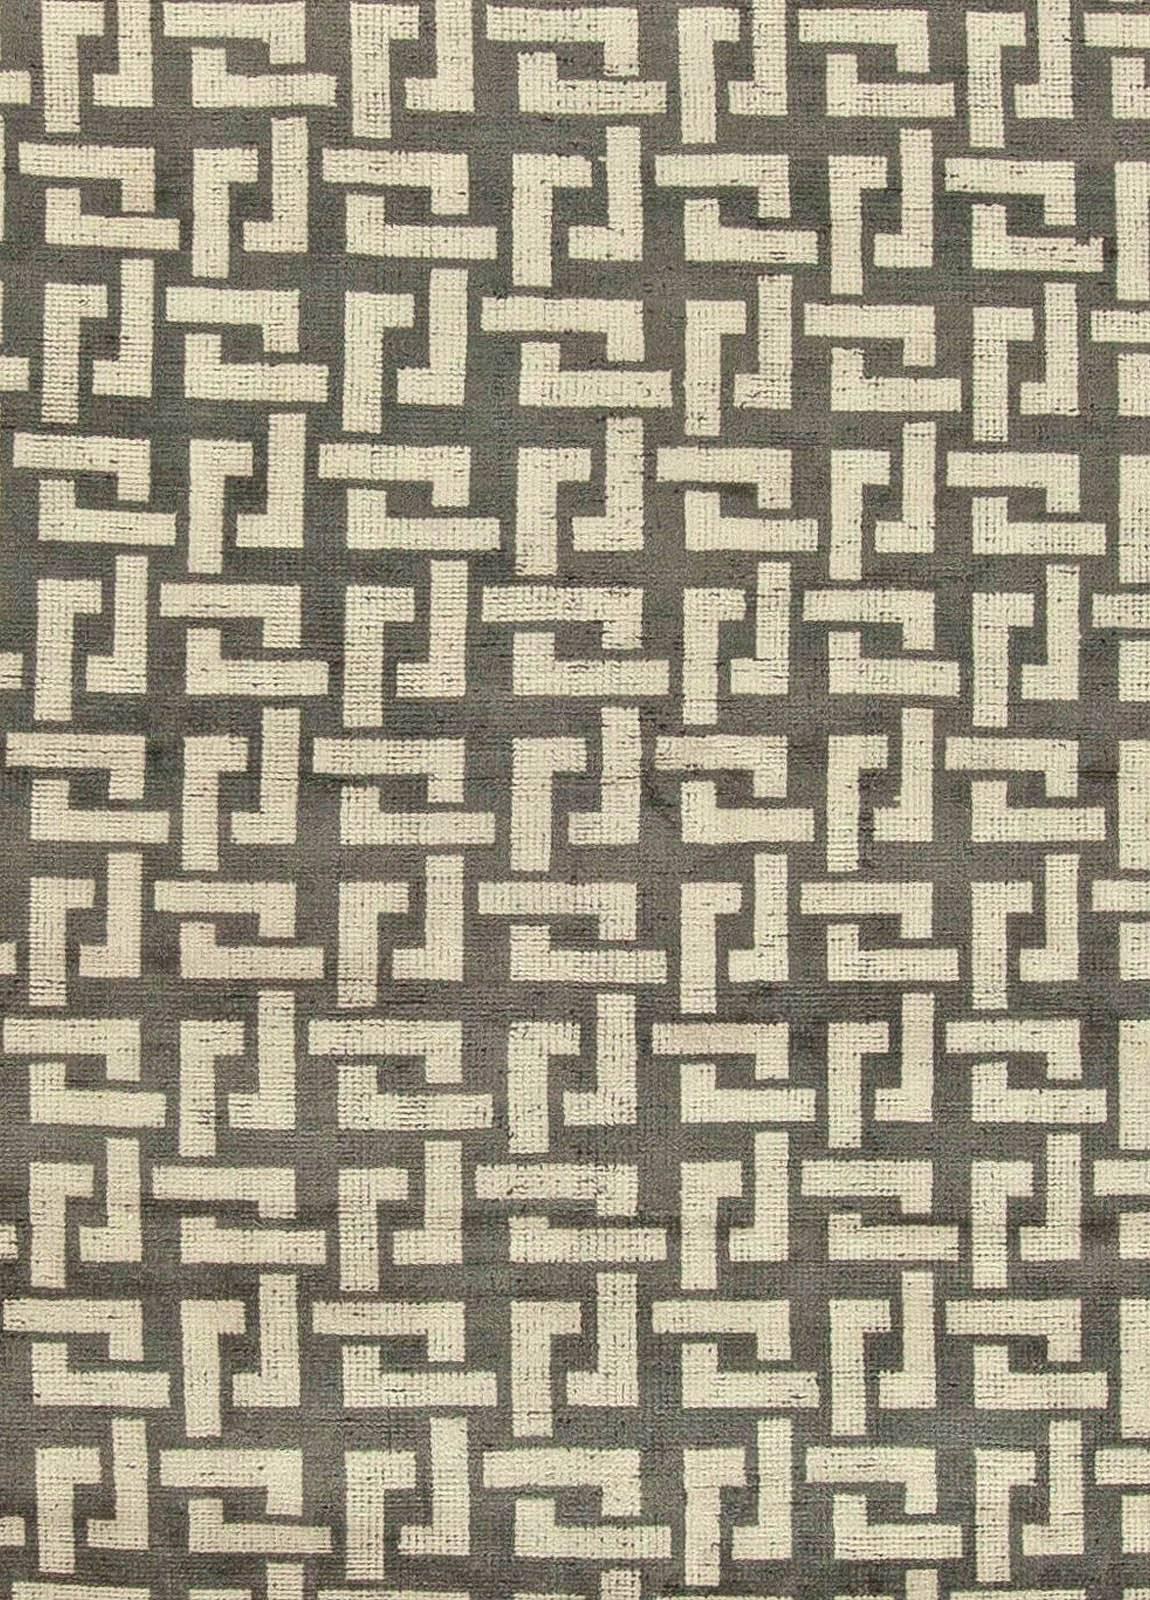 Contemporary black and white large modular geometric rug by Doris Leslie Blau
Size: 10'9